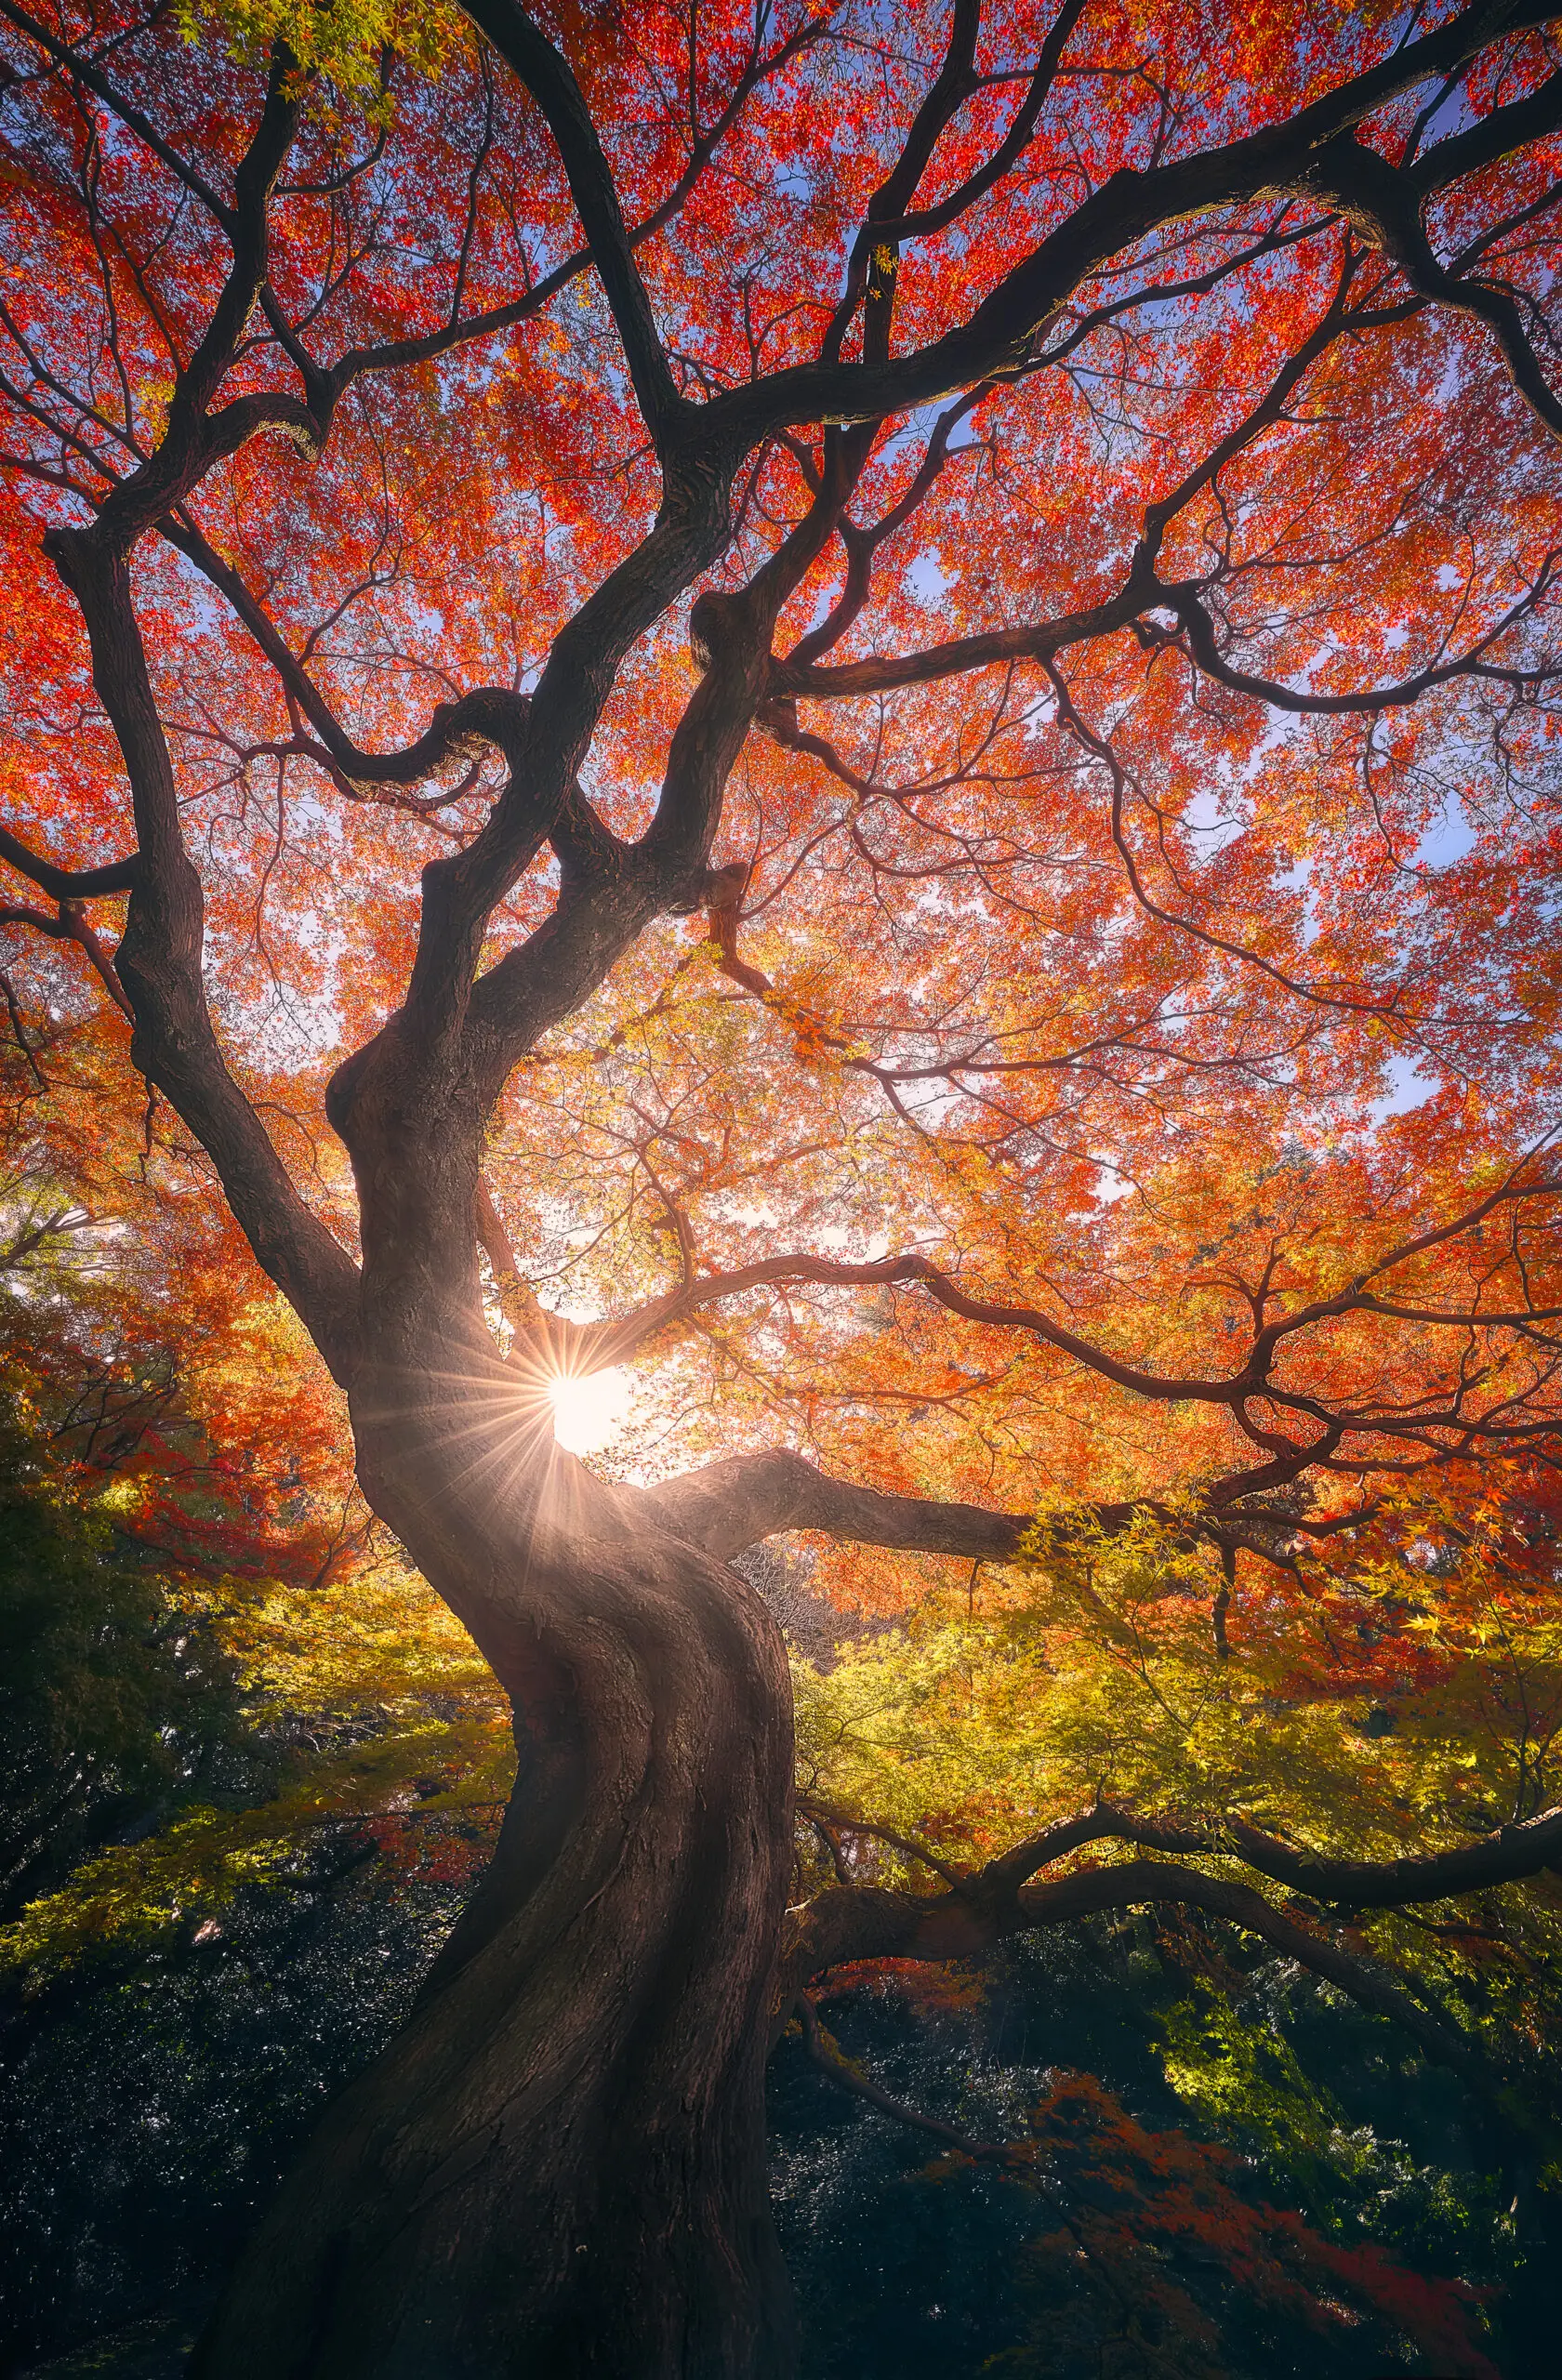 The Japanese Tree by Javier de la Torre, 1x.com